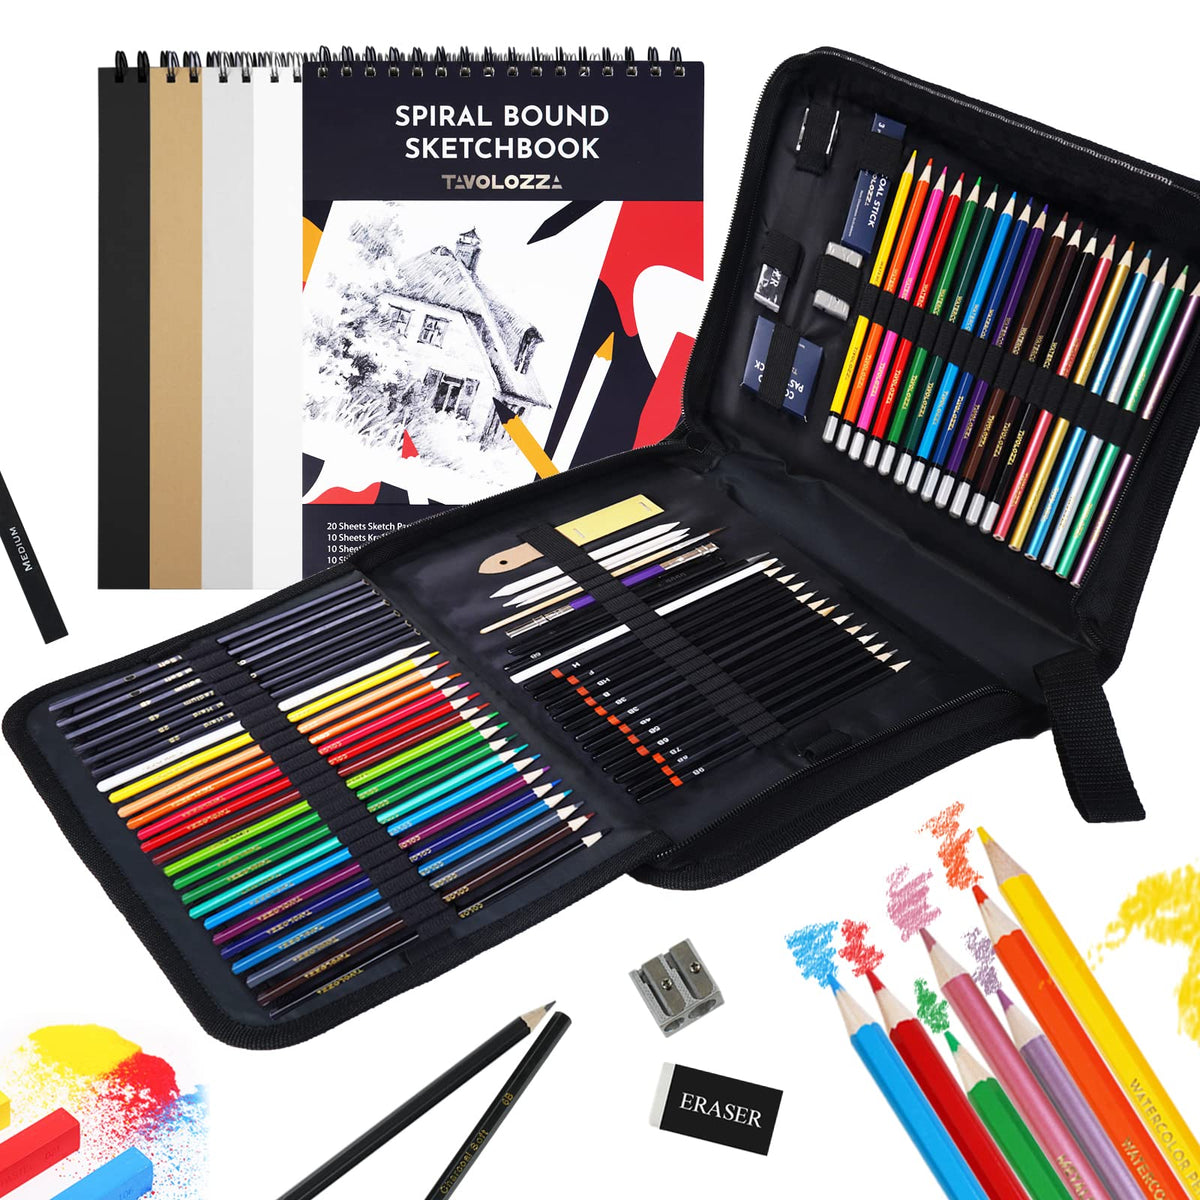  Artownlar 72 Pack Drawing Sketching Set with 8x11 Sketchbook, Pro Art Supplies Kit for Artist Adults Teens Beginner